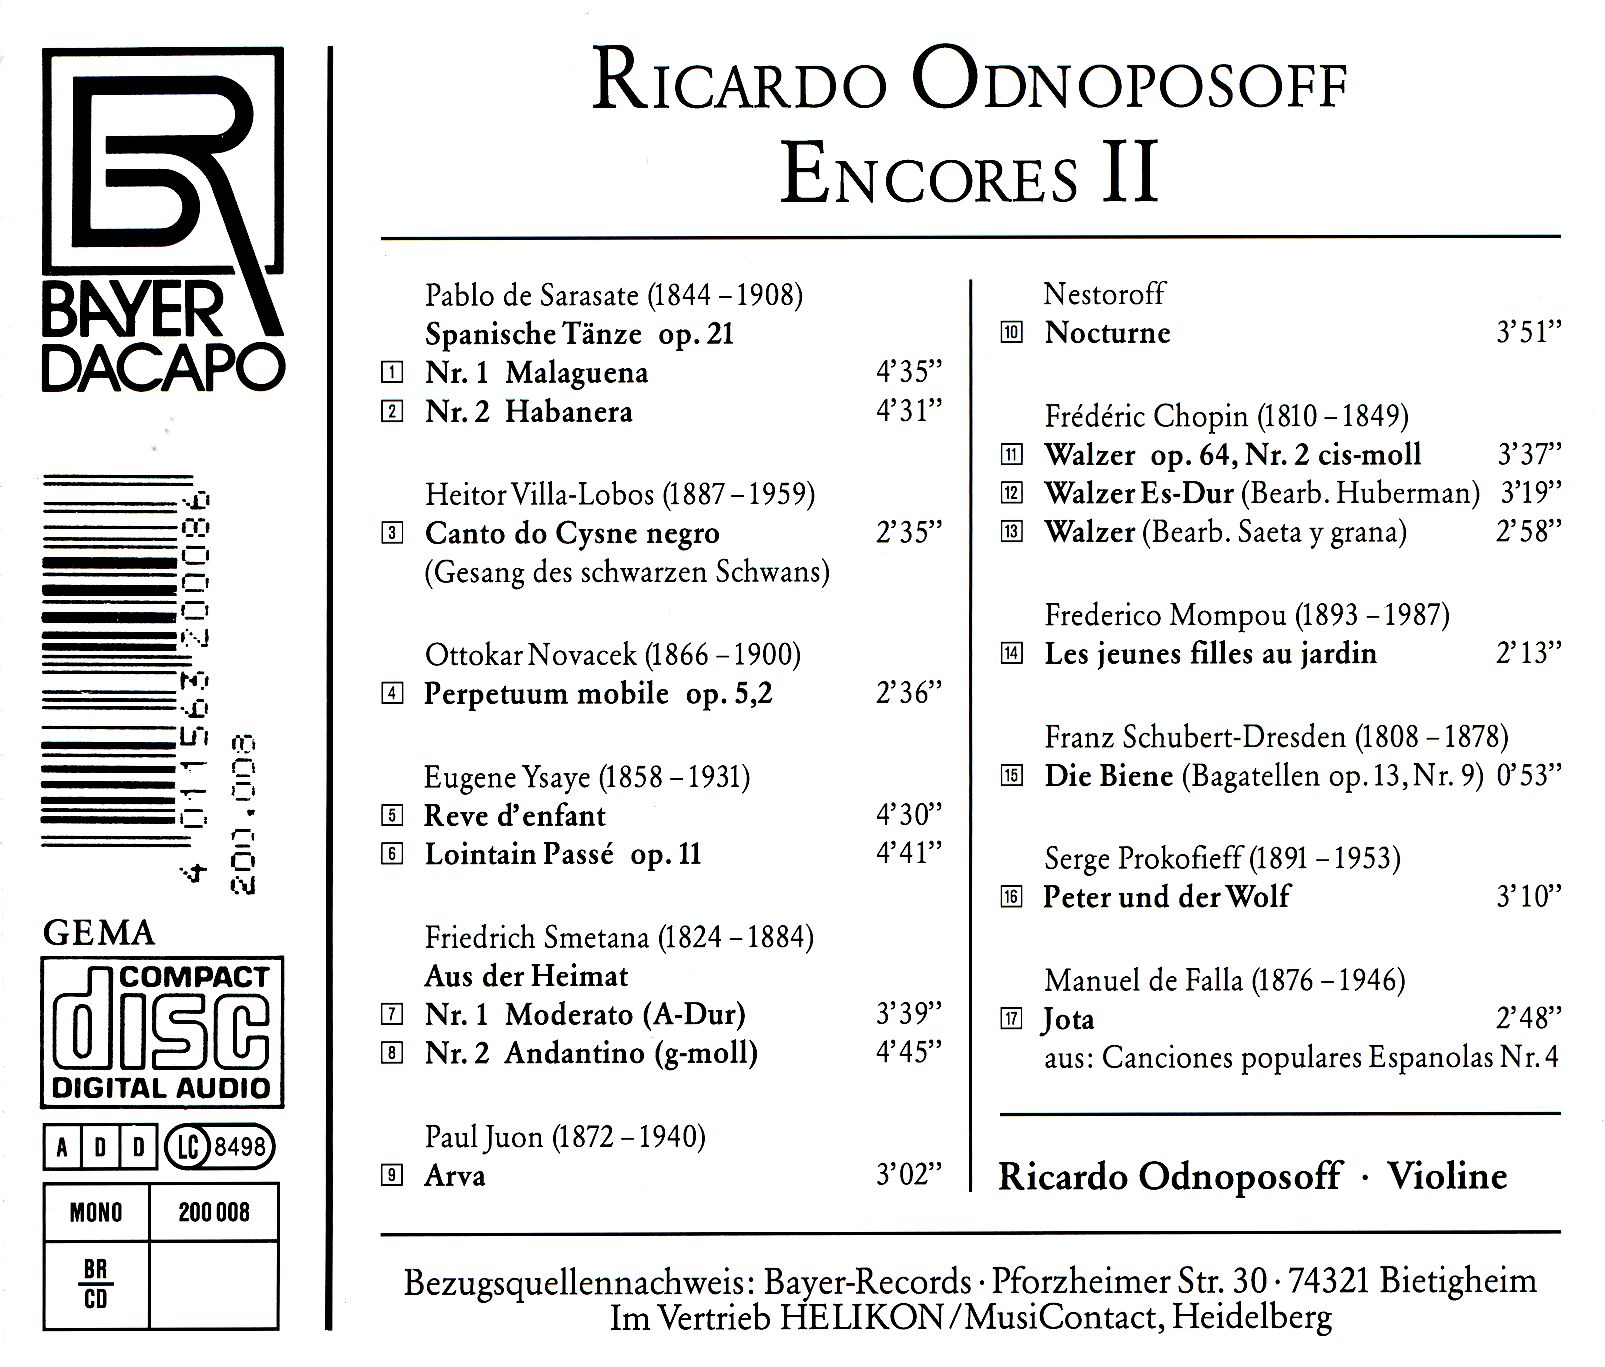 Ricardo Odnoposoff - Encores II